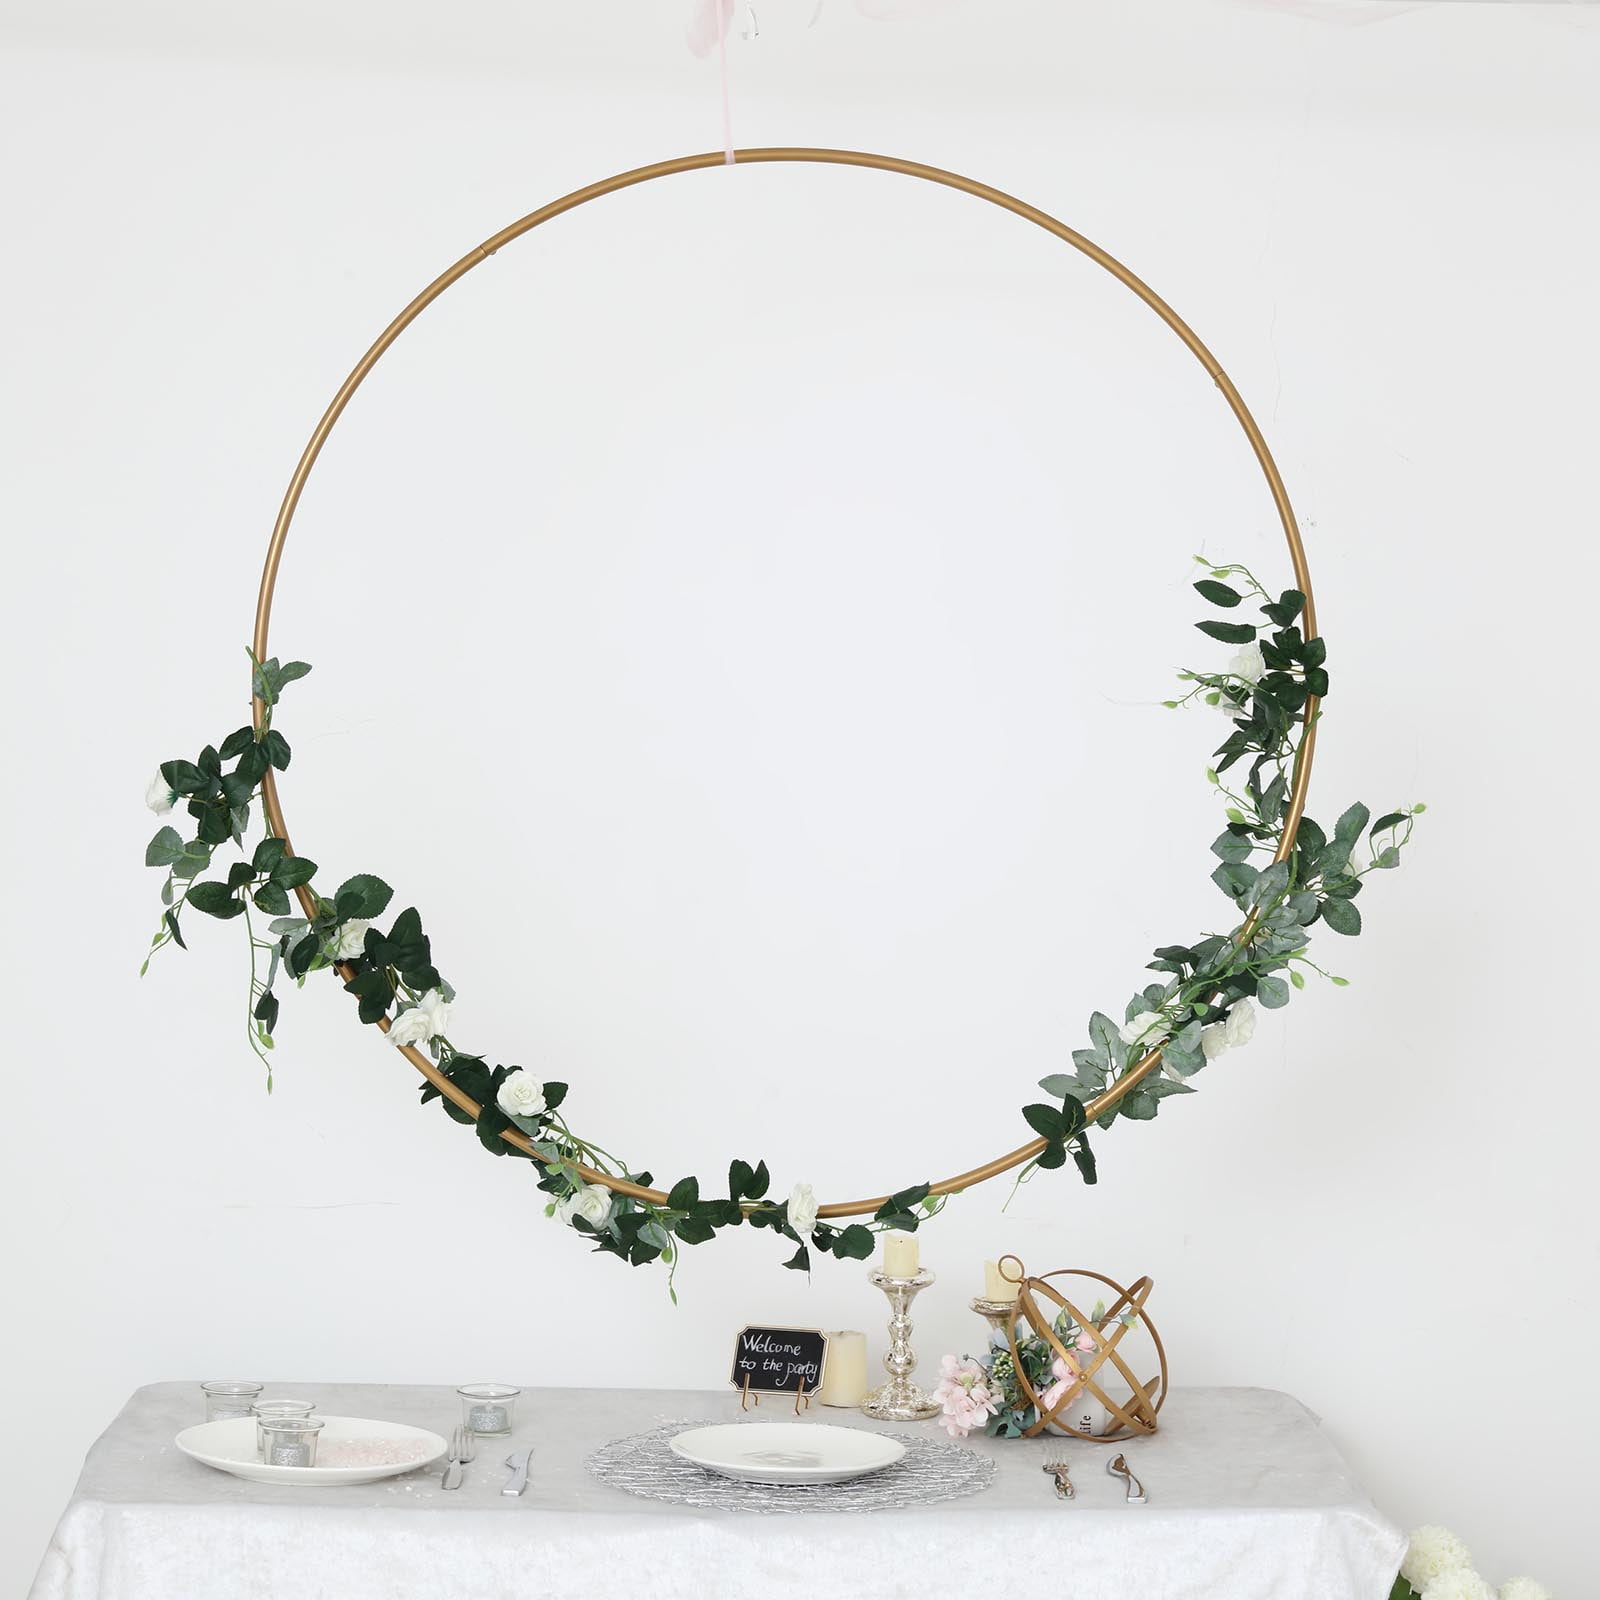 Metal Rings for Crafts Dried Flower Wreath Tie Ring Gold Black White 20cm  30cm 40cm 50cm Gift Craft Wedding Hoop Flower Ring DIY -  Israel